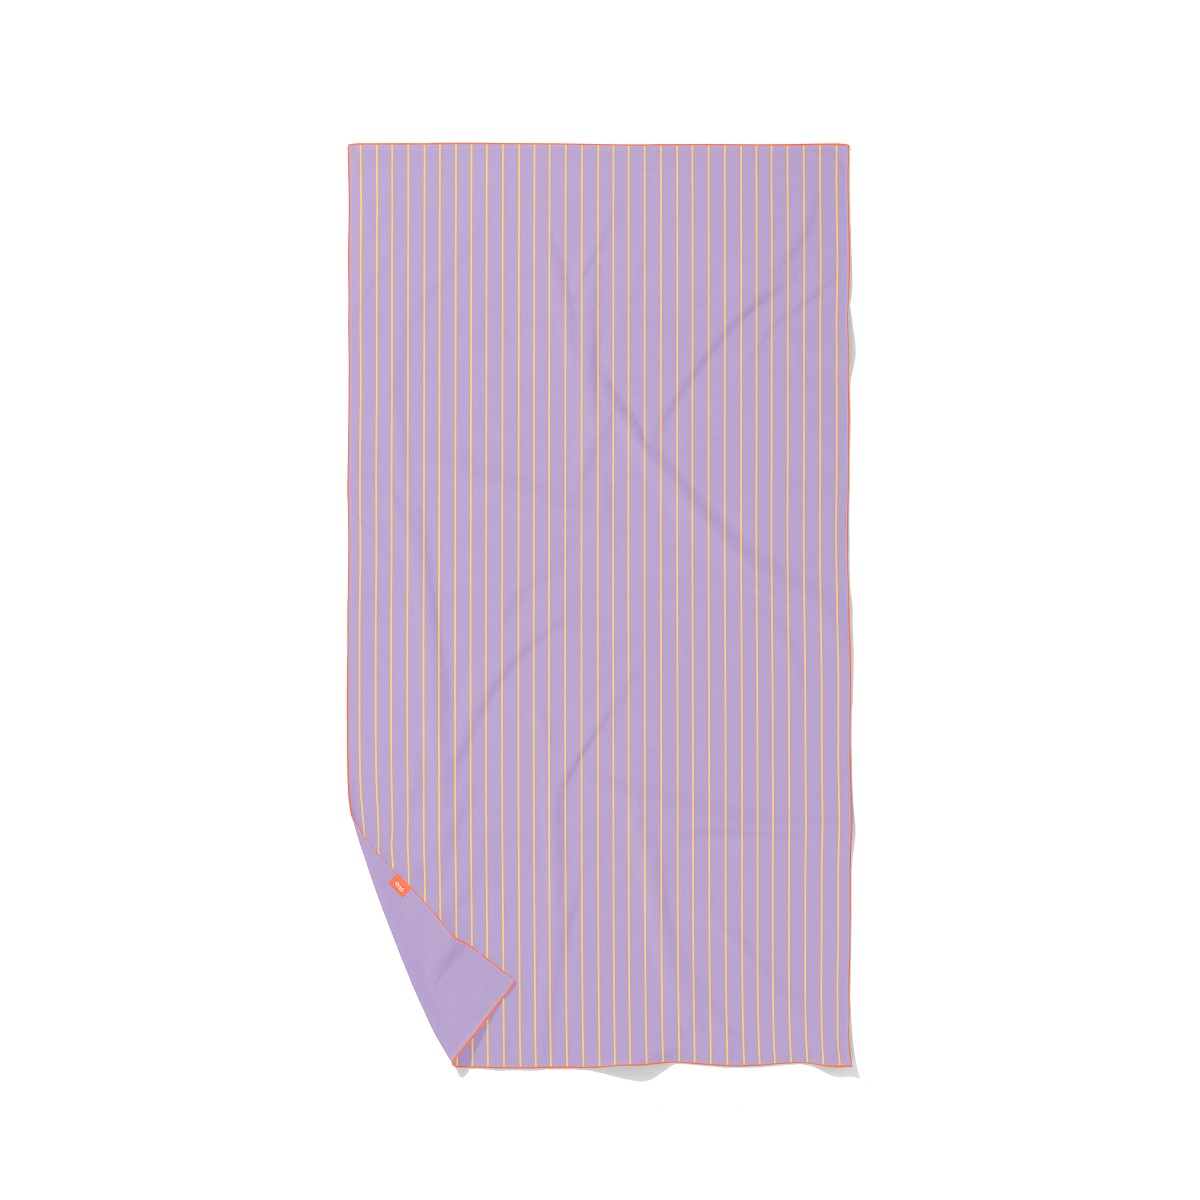 Play Towel - Hopscotch 180x100cm PRE-ORDER FOR JUNE